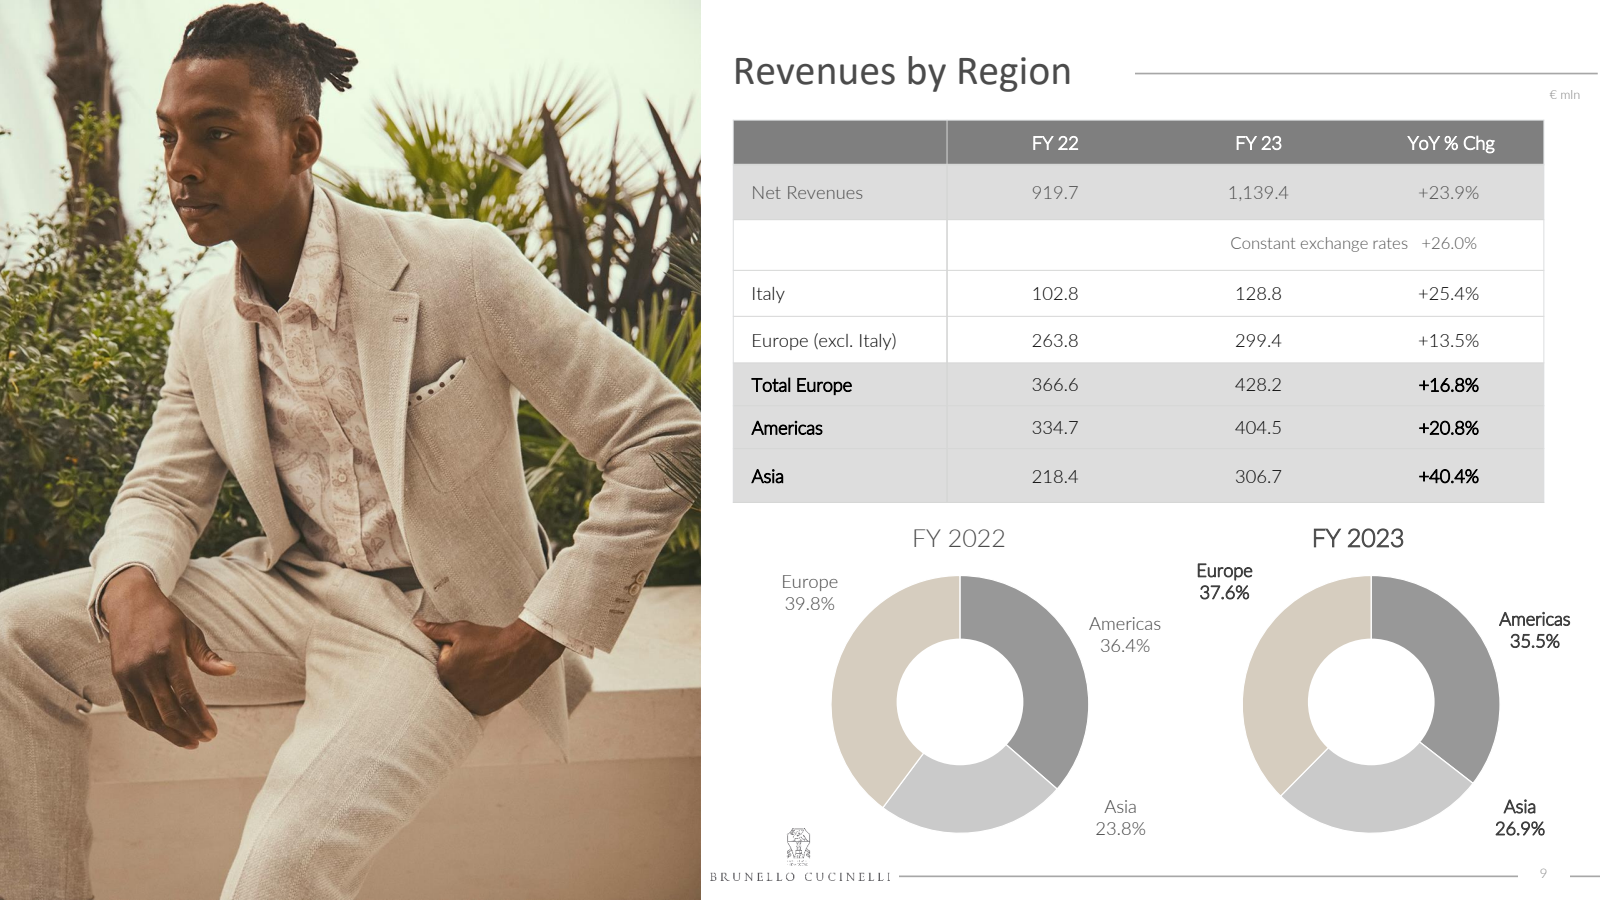 Revenues by Region 
